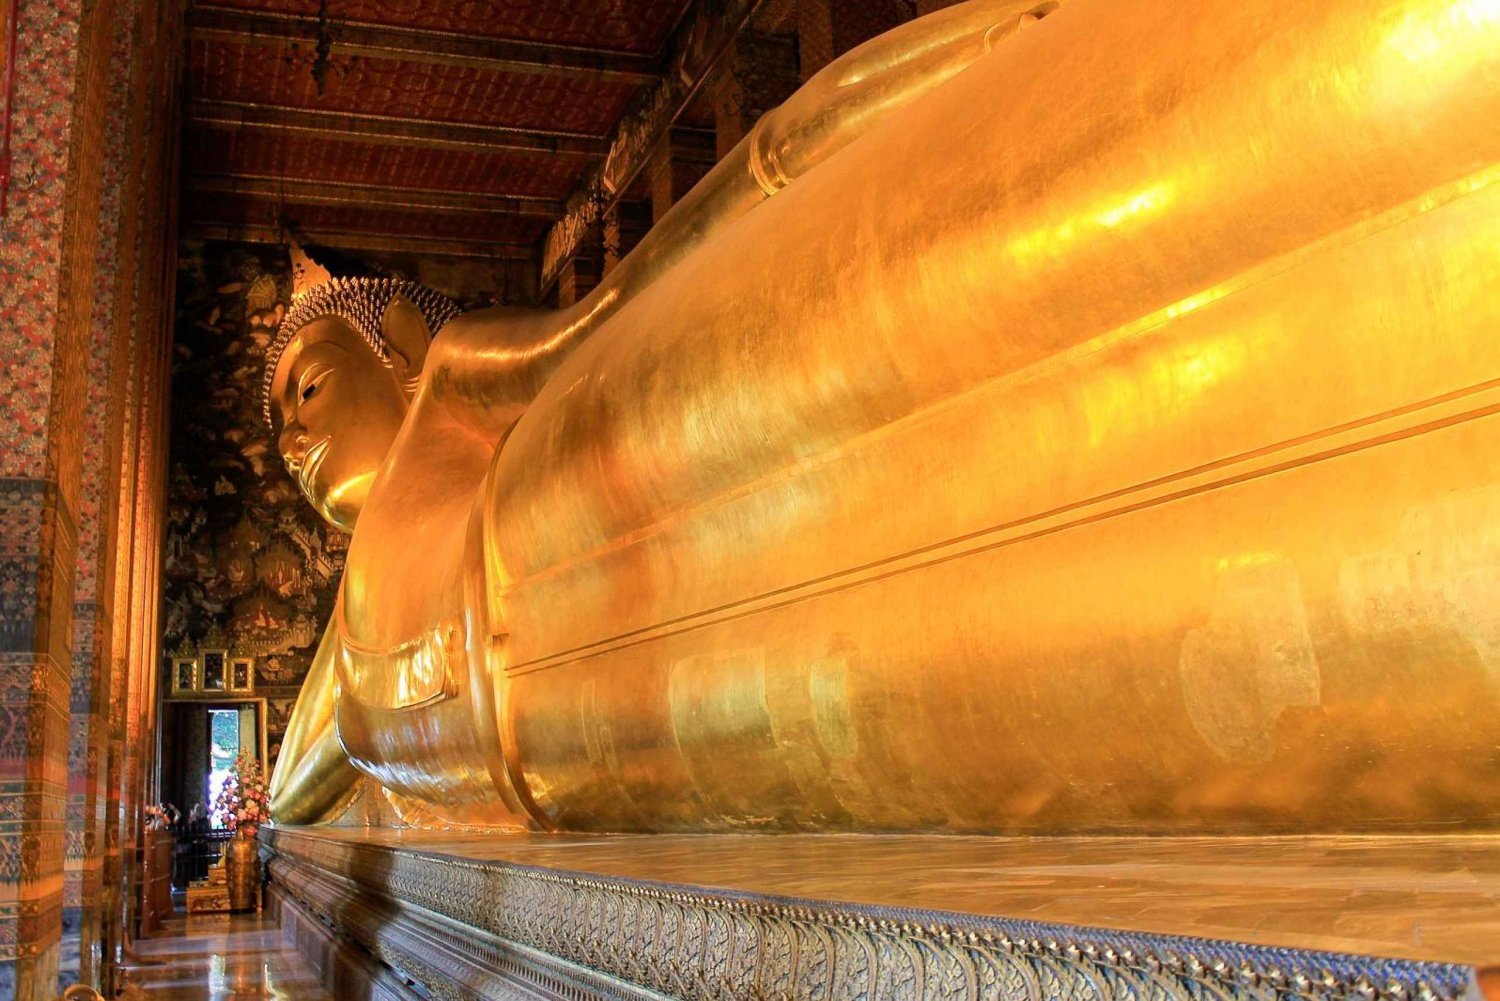 Bangkok: Excursão ao Grande Palácio Real, Wat Pho e Wat Arun